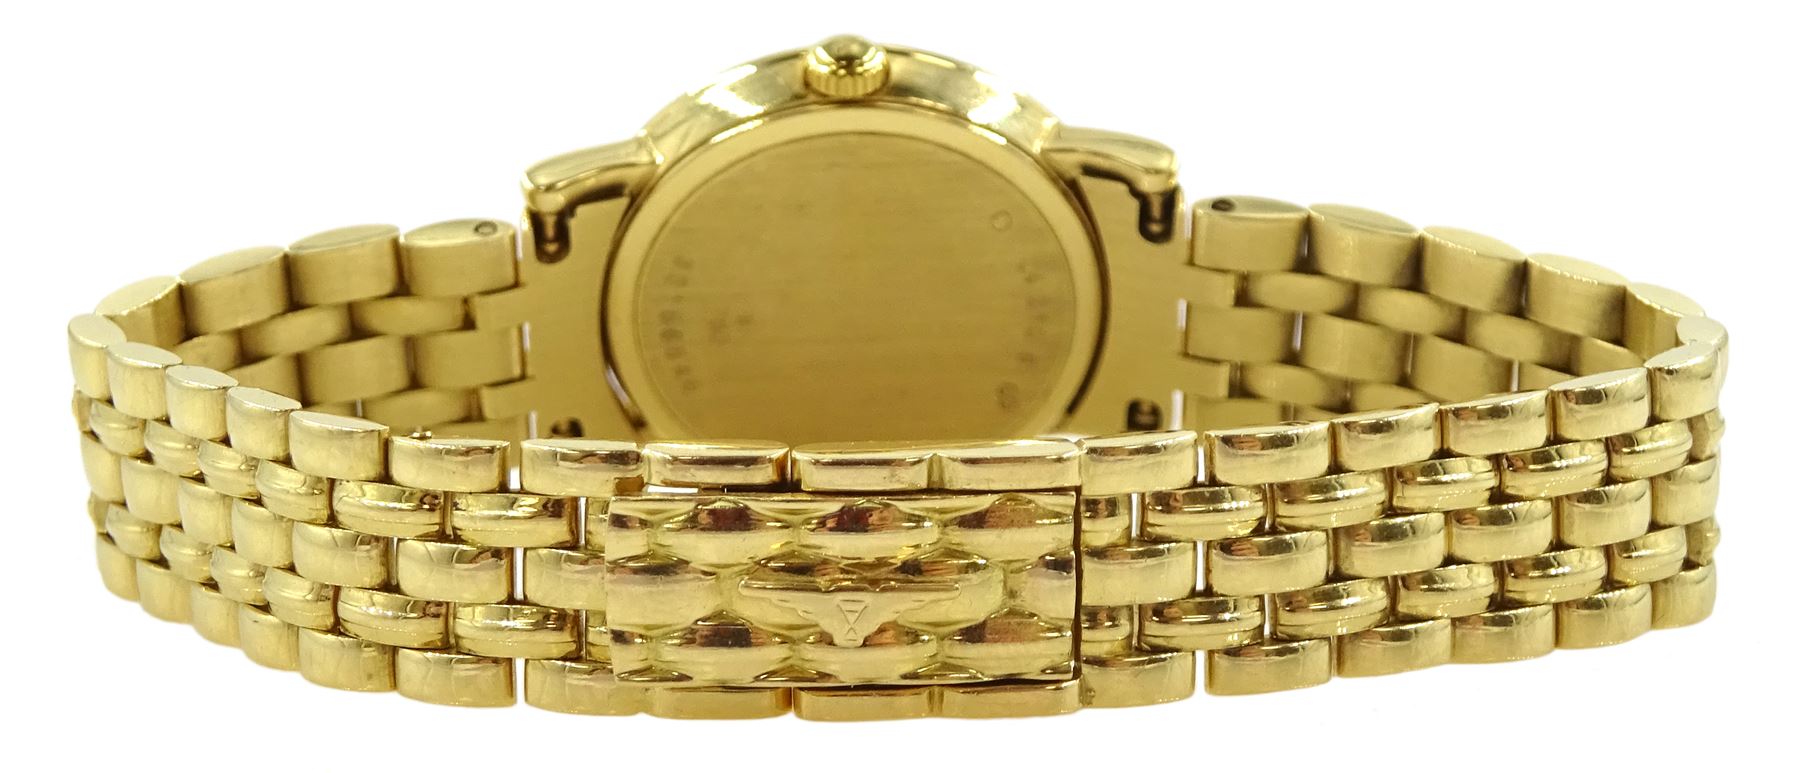 Longines Prestige 18ct gold ladies quartz wristwatch - Image 2 of 3